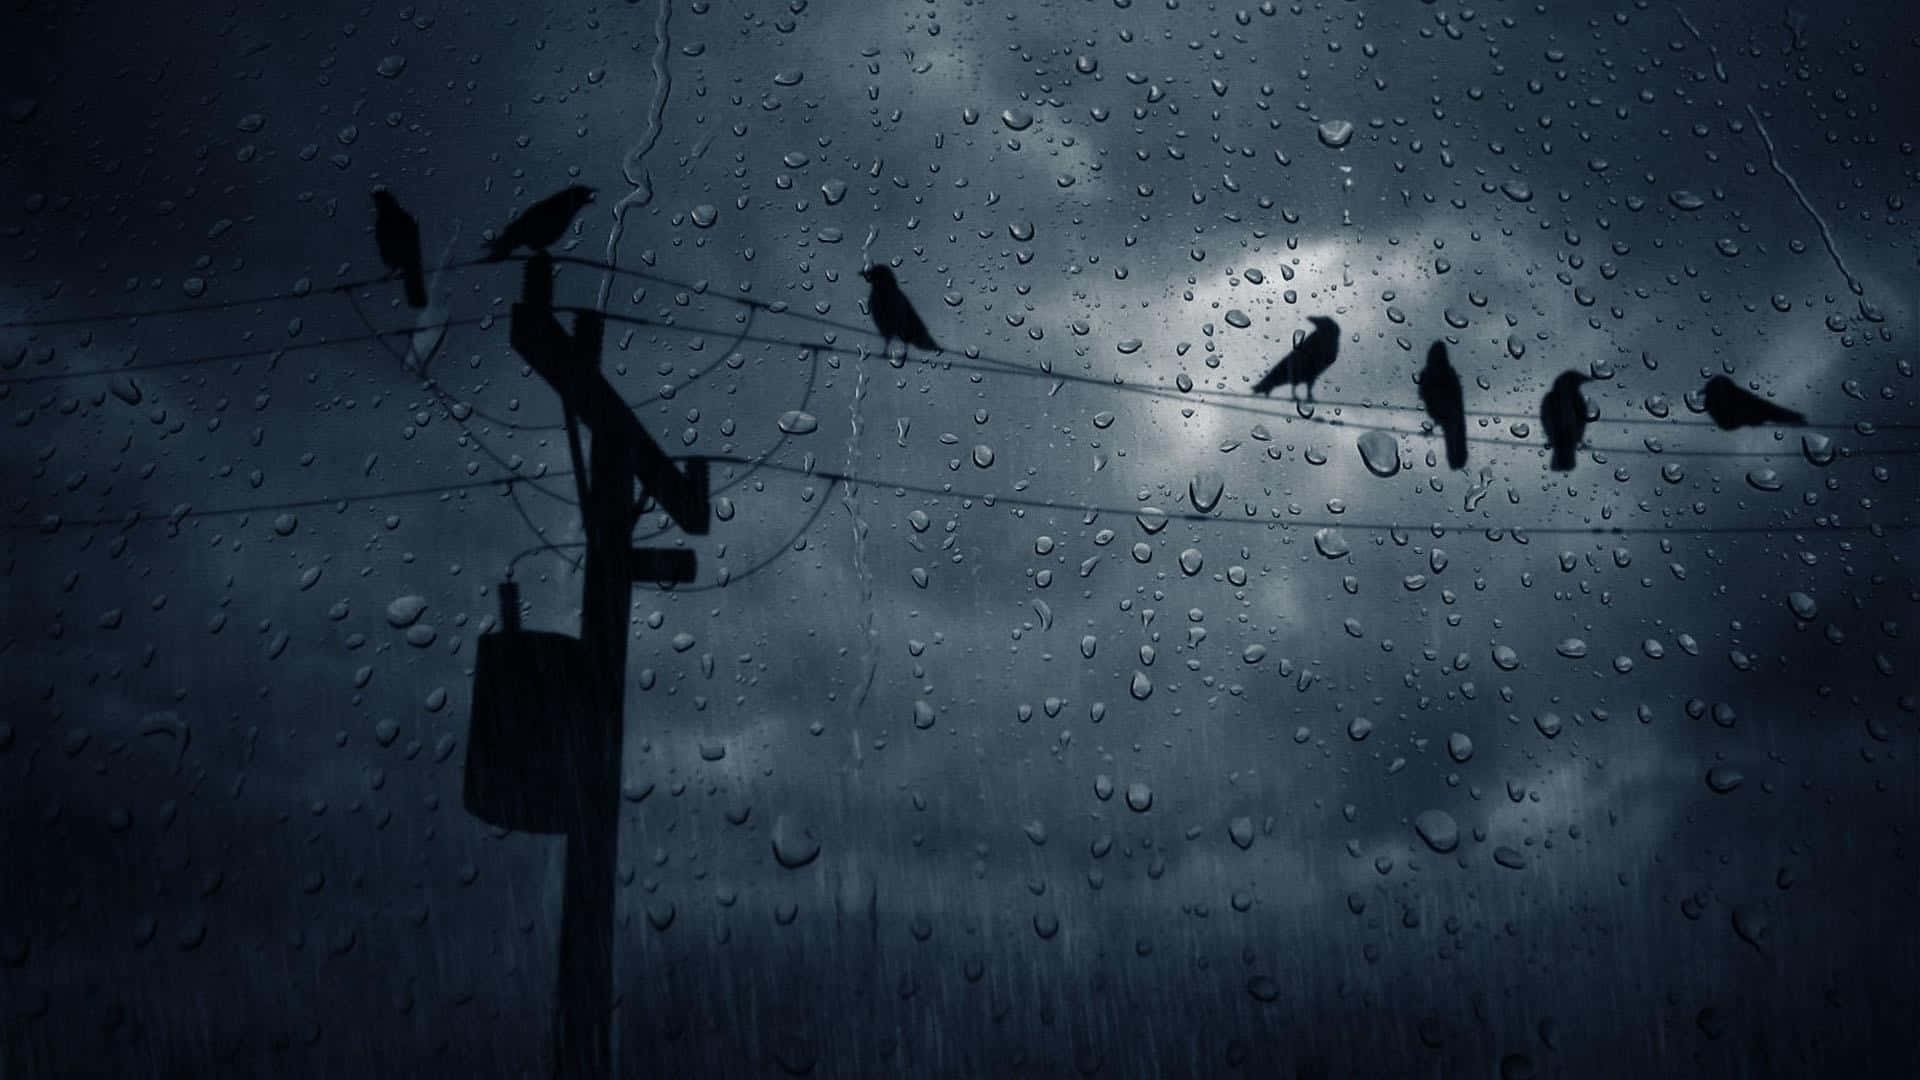 Fuglepå En Telefonstolpe I Regnen.